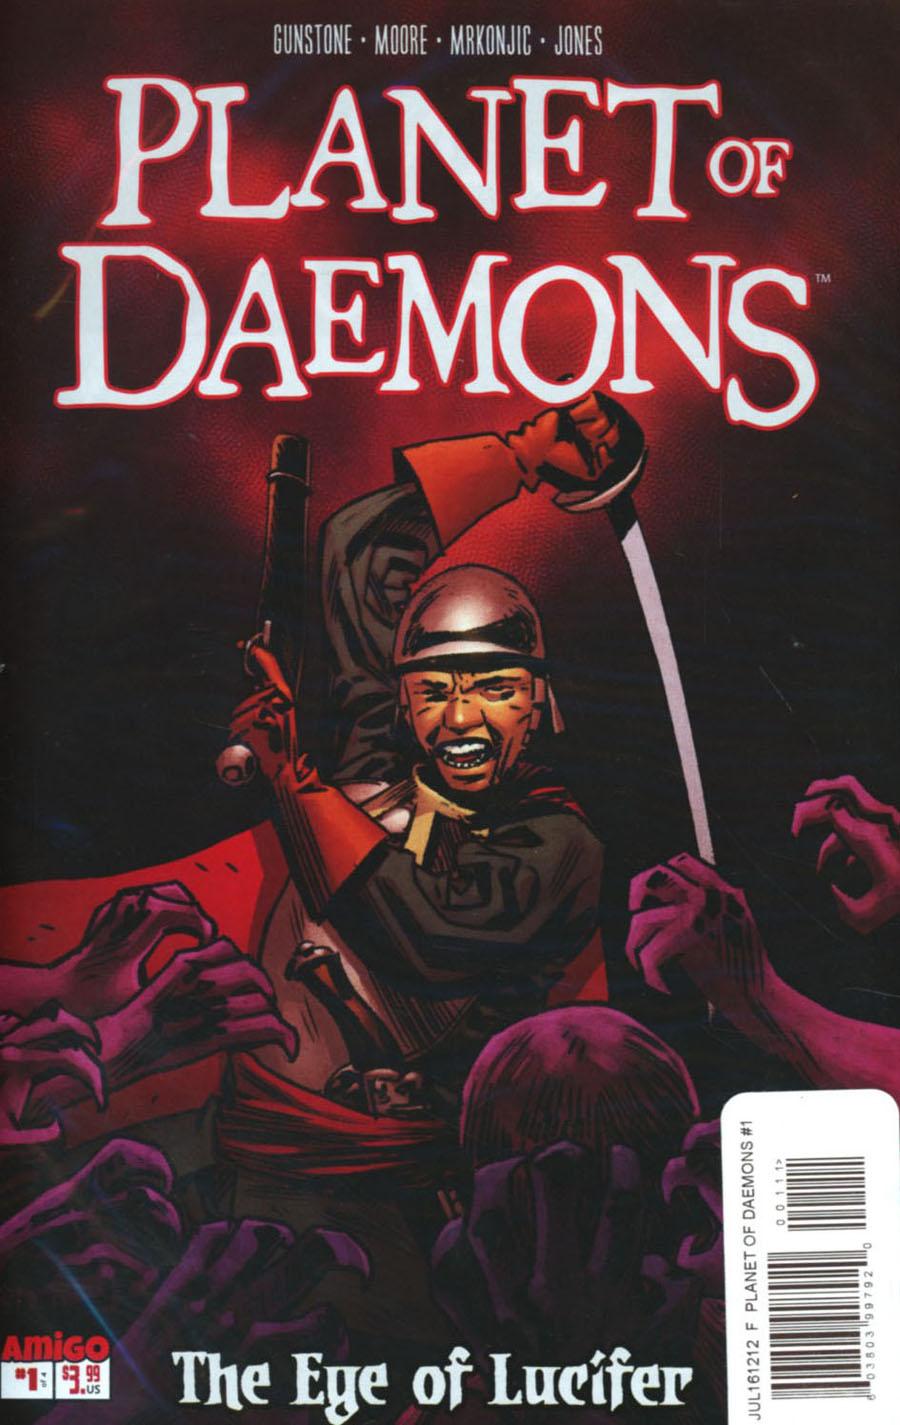 Planet Of Daemons Vol. 1 #1